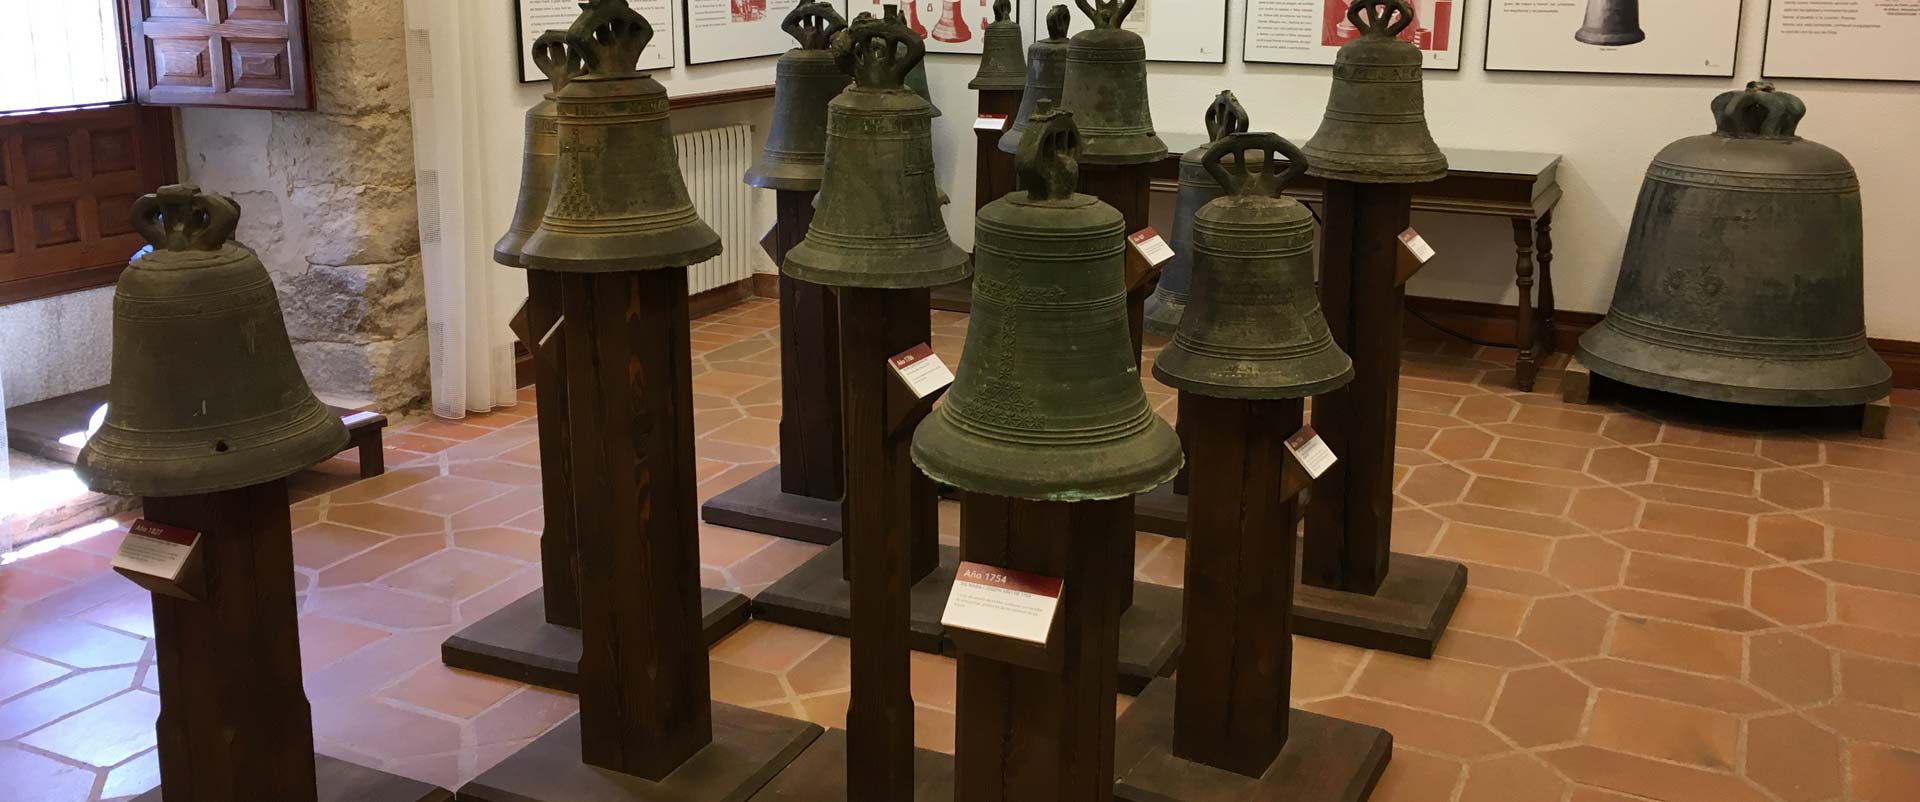 Exposición de campanas